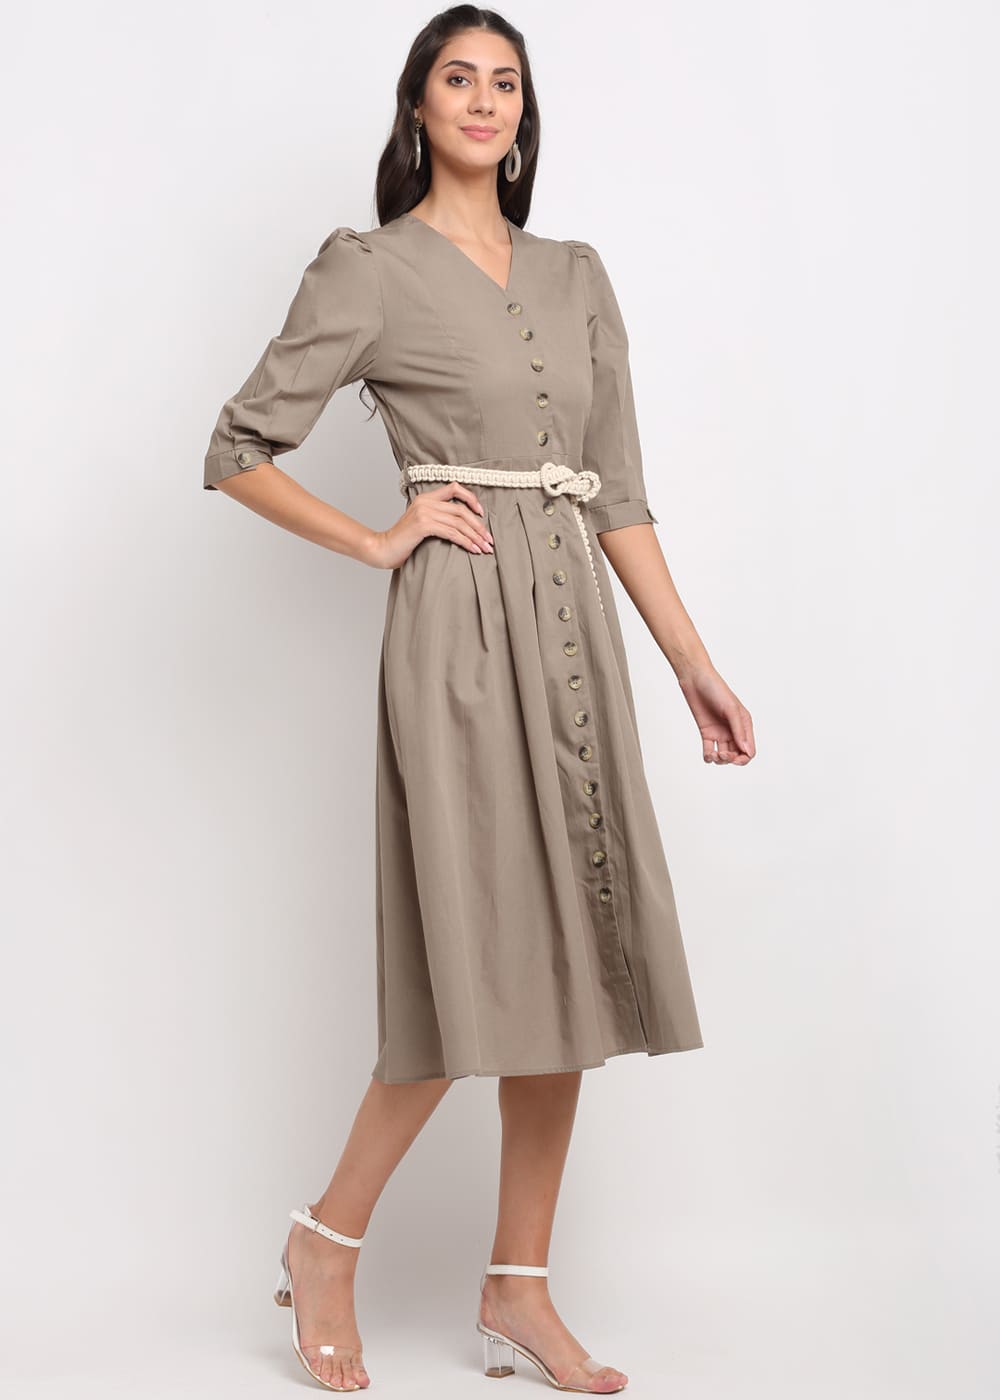 Blanc9 Brown knee length Dress